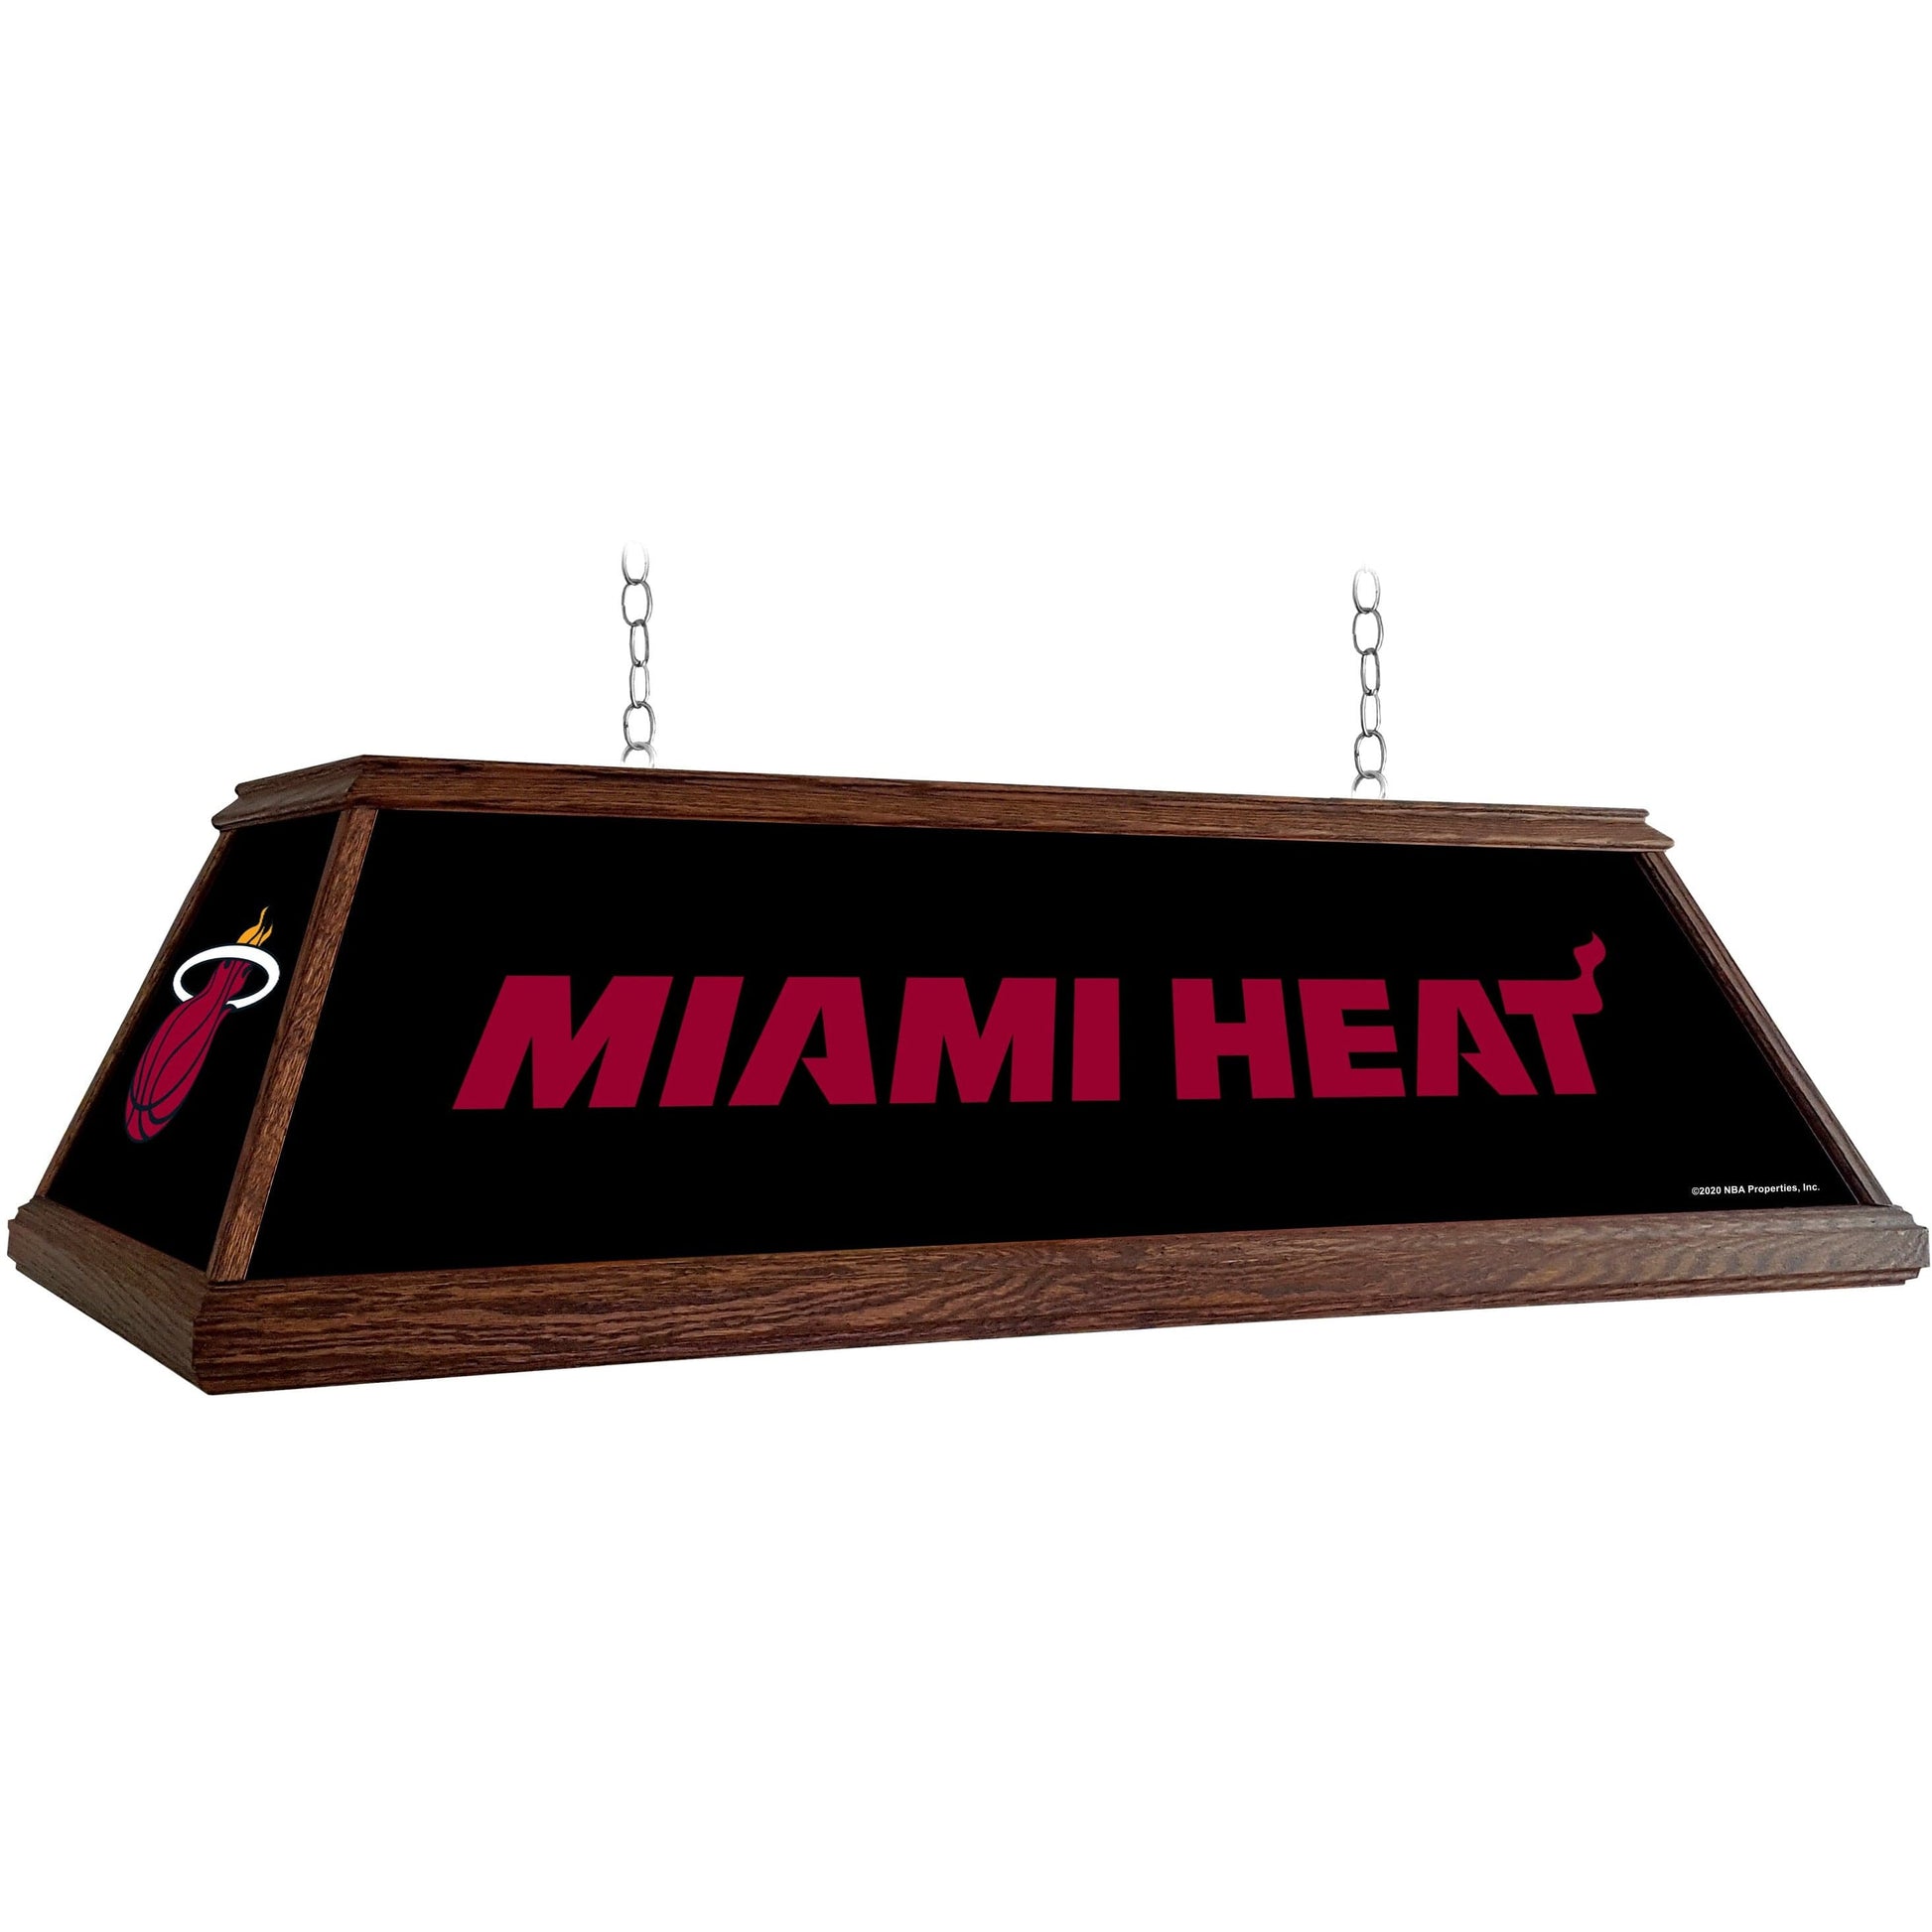 Miami Heat: Premium Wood Pool Table Light - The Fan-Brand